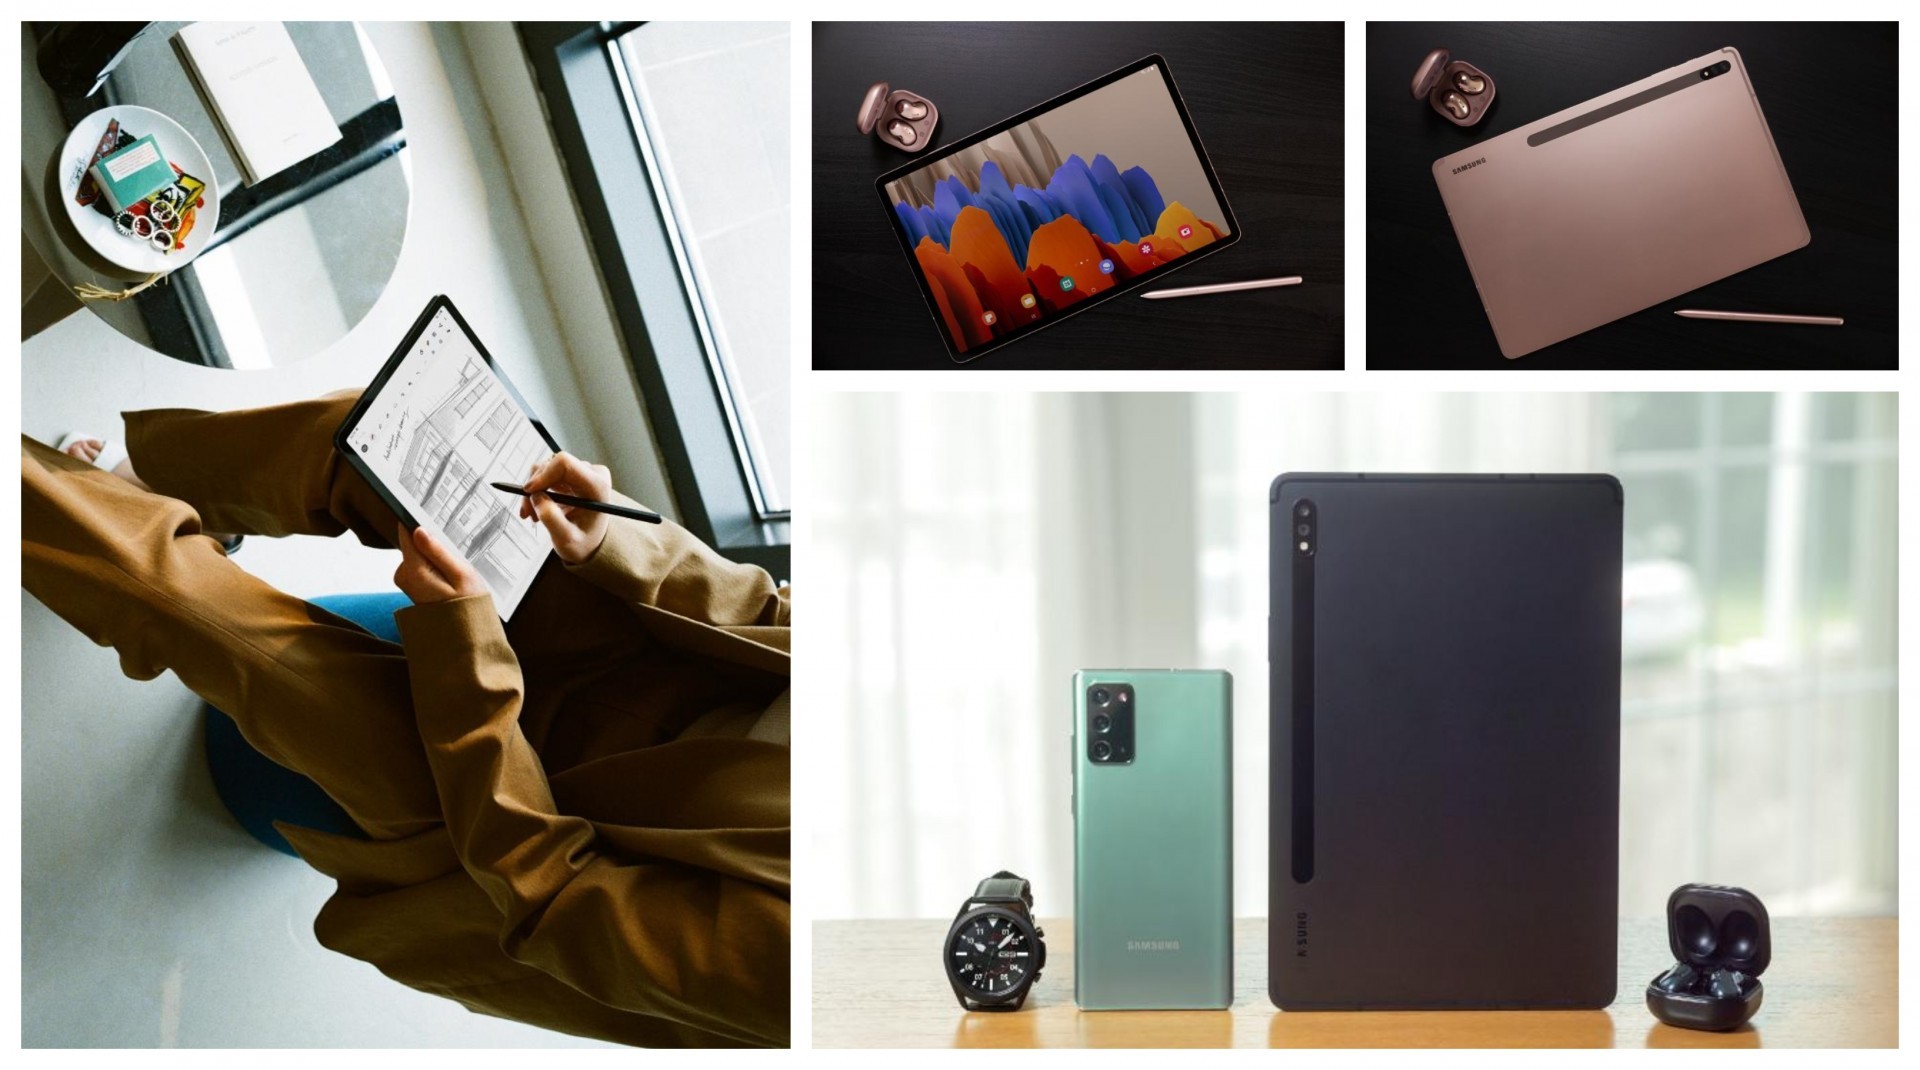 Galaxy Tab S7｜S7+: нови Samsung таблети за работа и забава